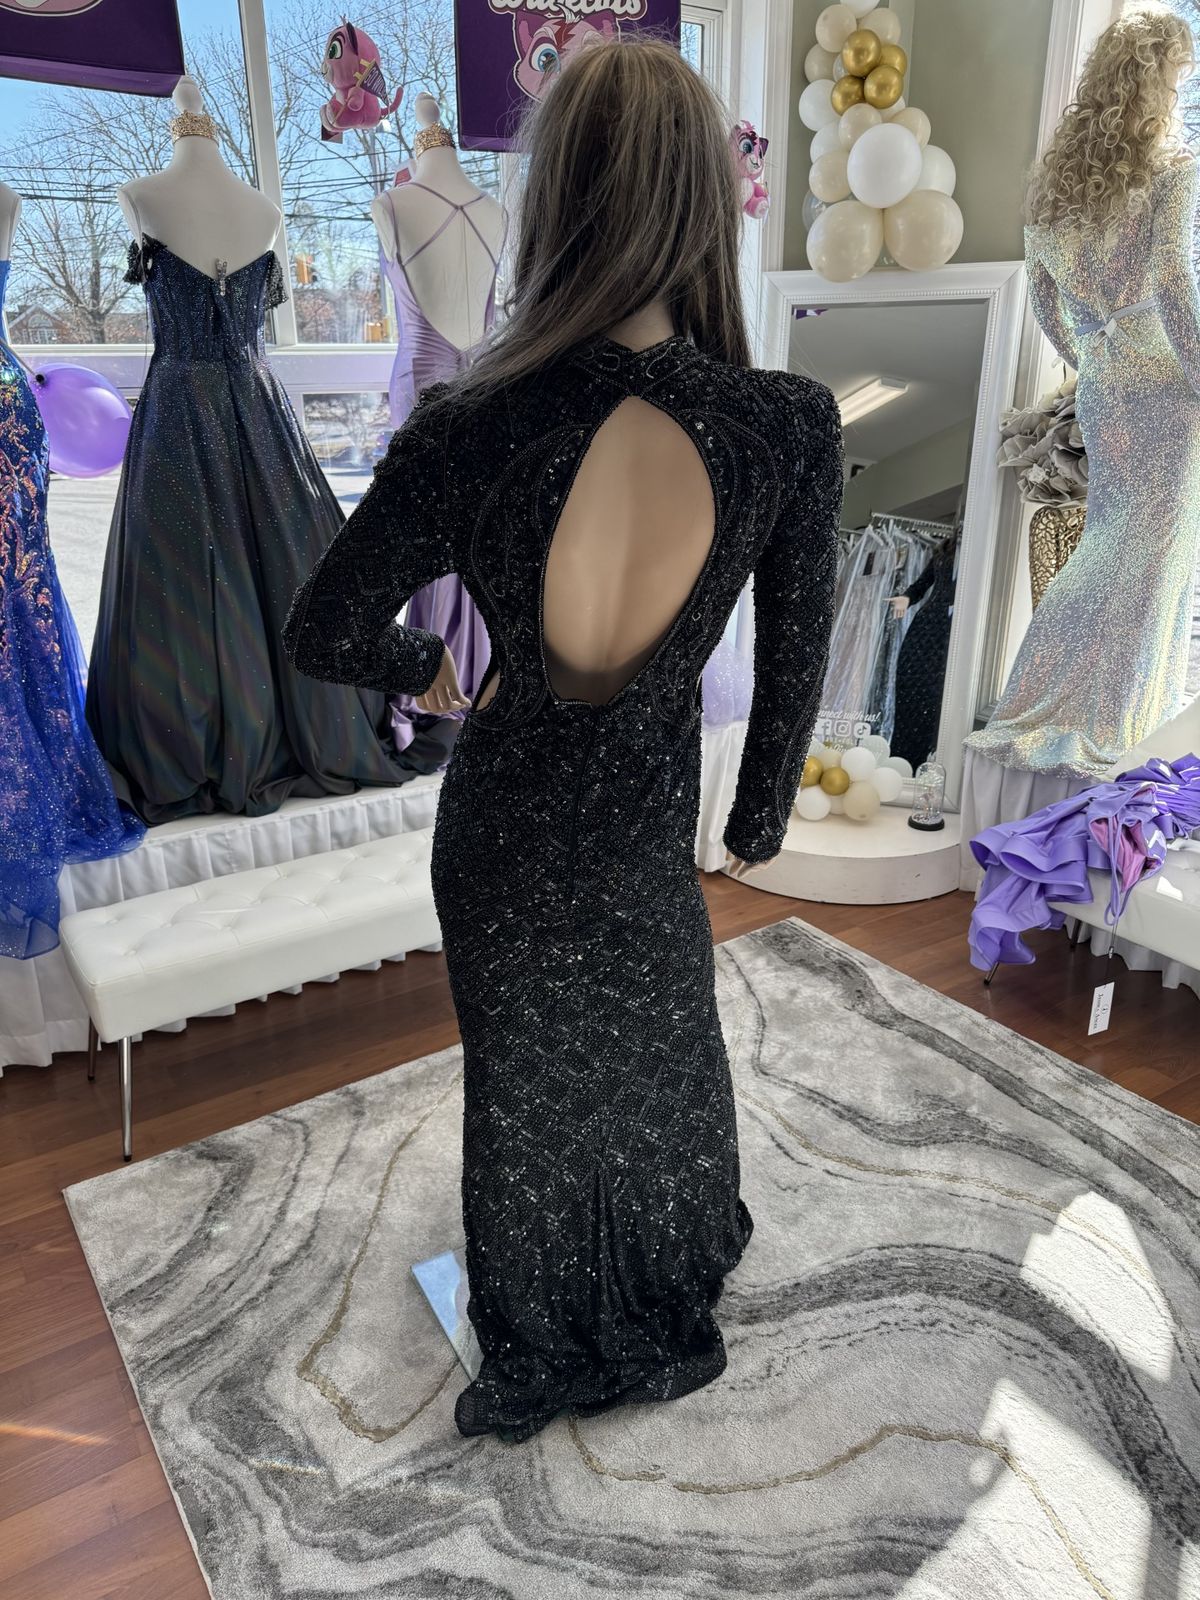 Style 52916 Sherri Hill Size 6 Prom Long Sleeve Burgundy Black Mermaid Dress on Queenly